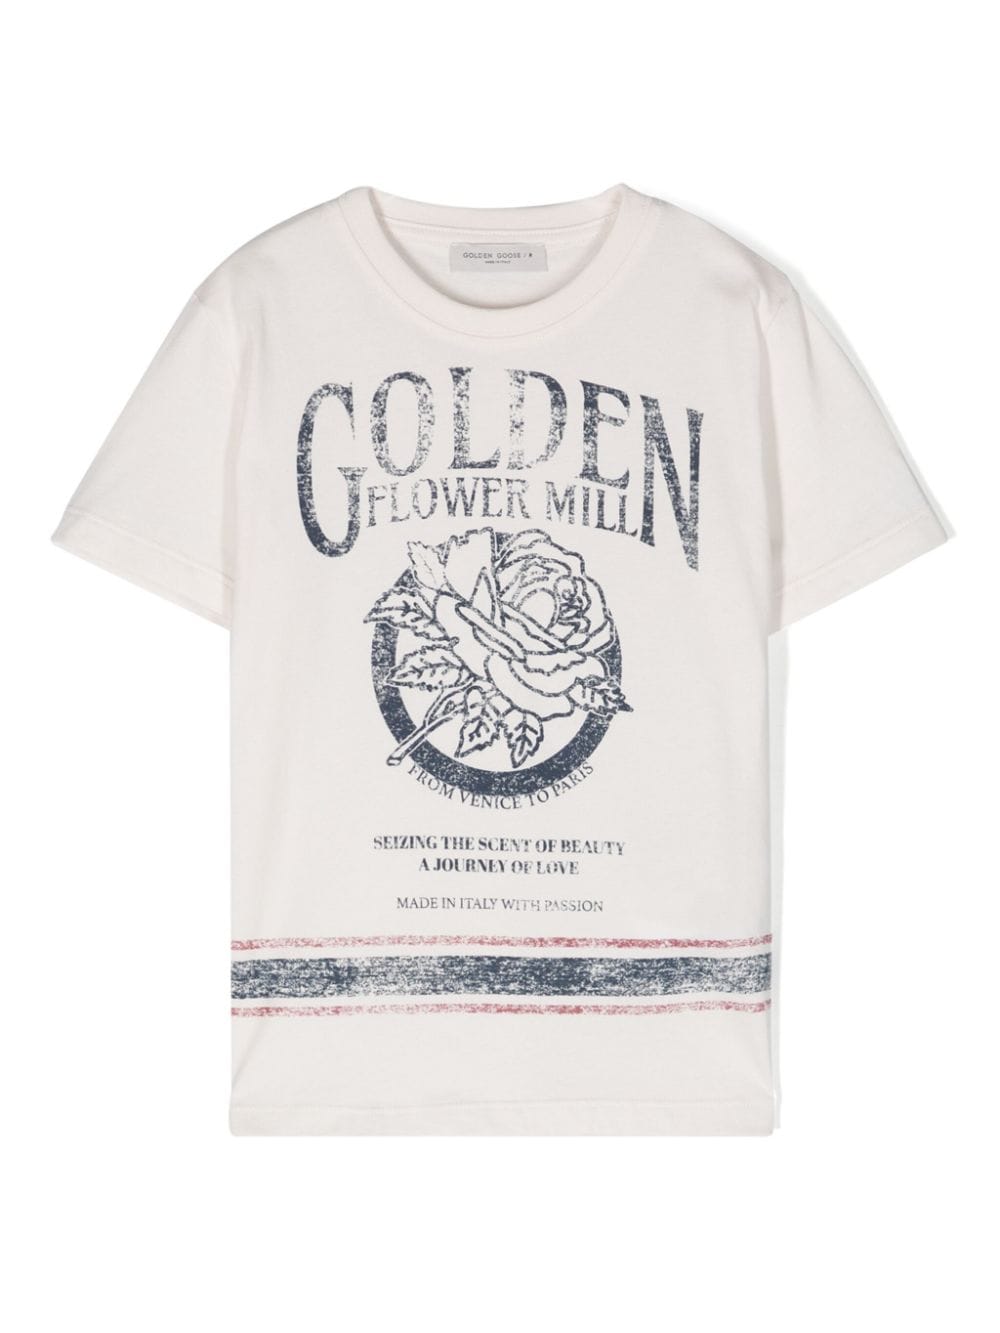 T-shirt Golden Flower Mill - Rubino Kids